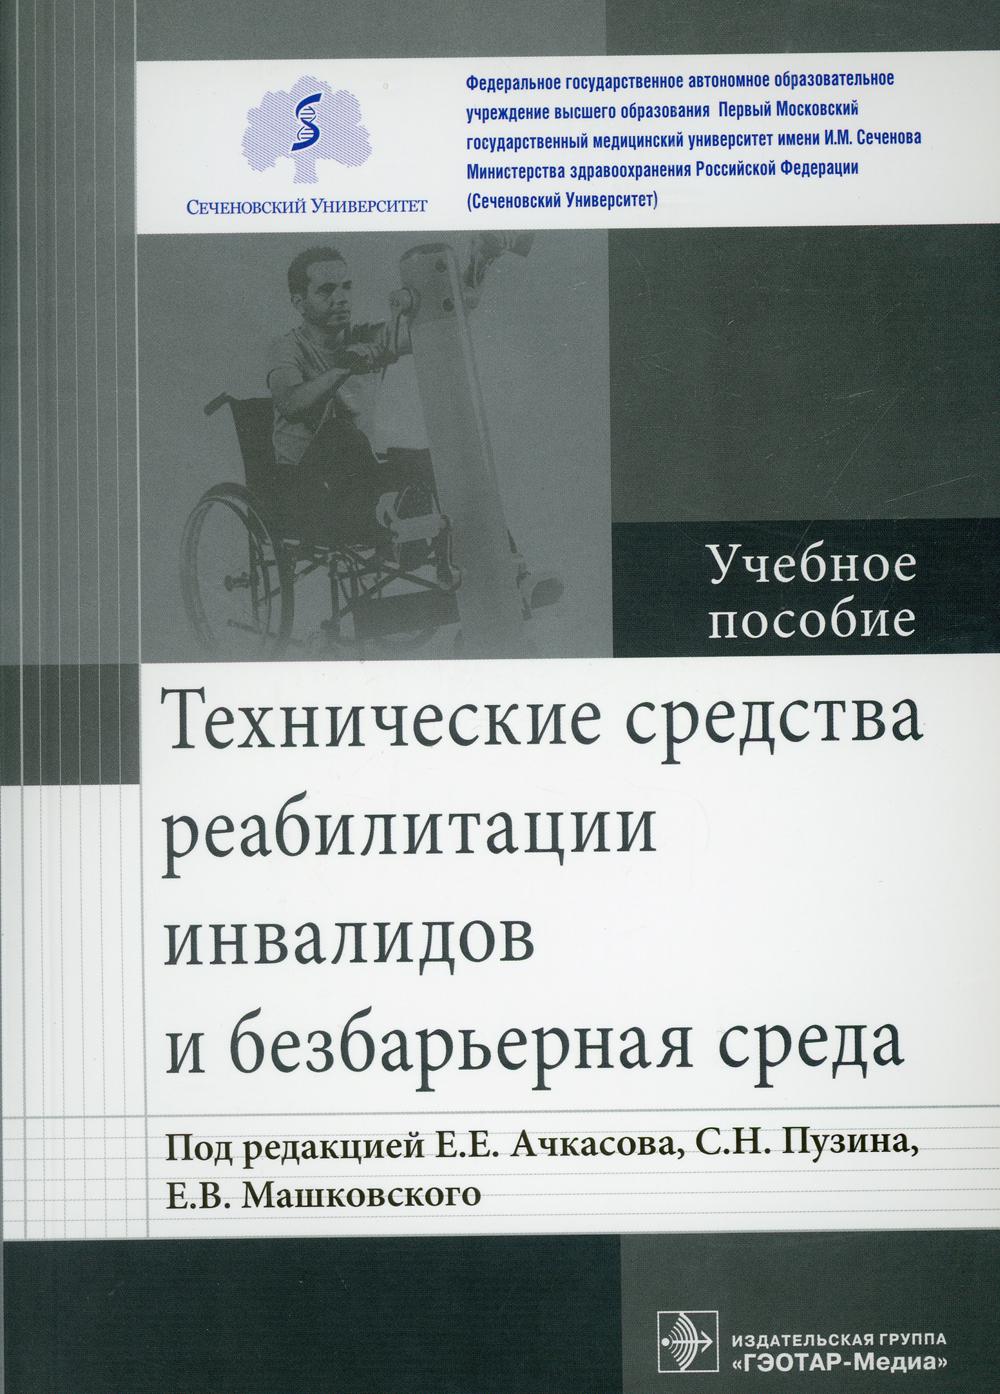 фото Книга технические средства реабилитации инвалидов и безбарьерная среда гэотар-медиа